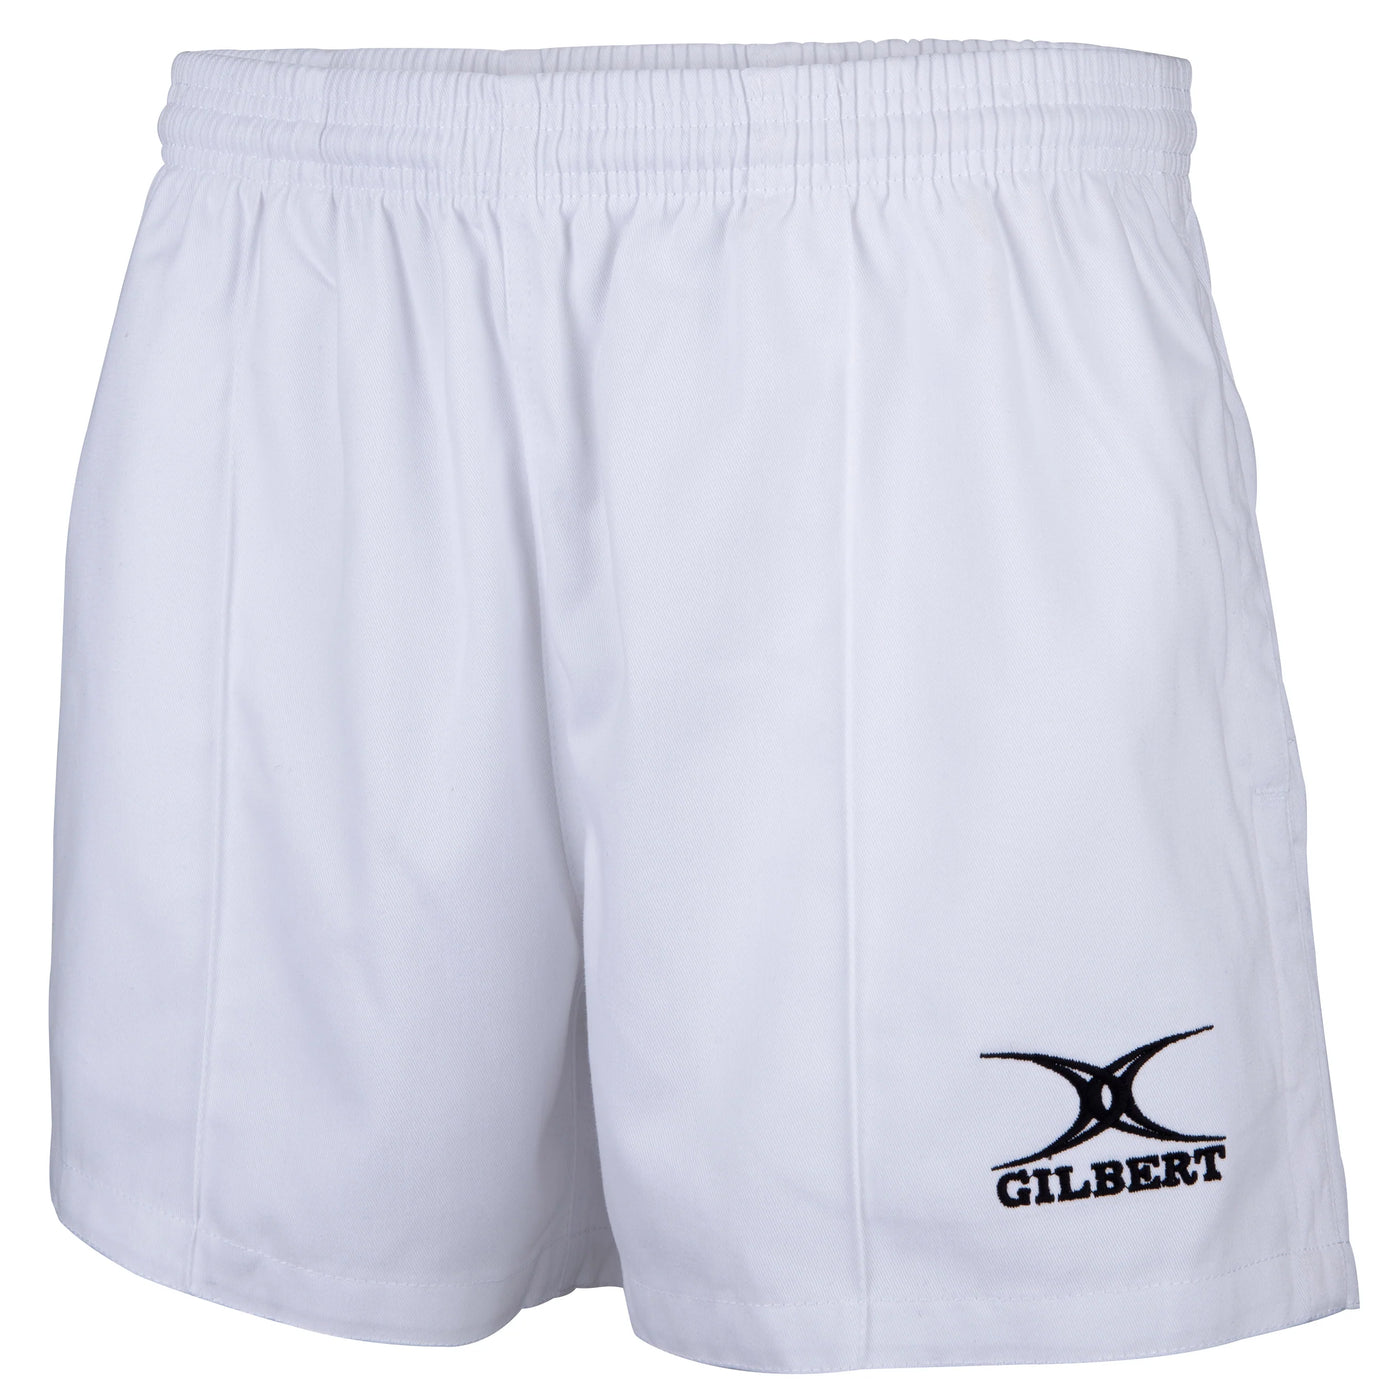 Kiwi Pro Rugby Short Blanc (avec poches)